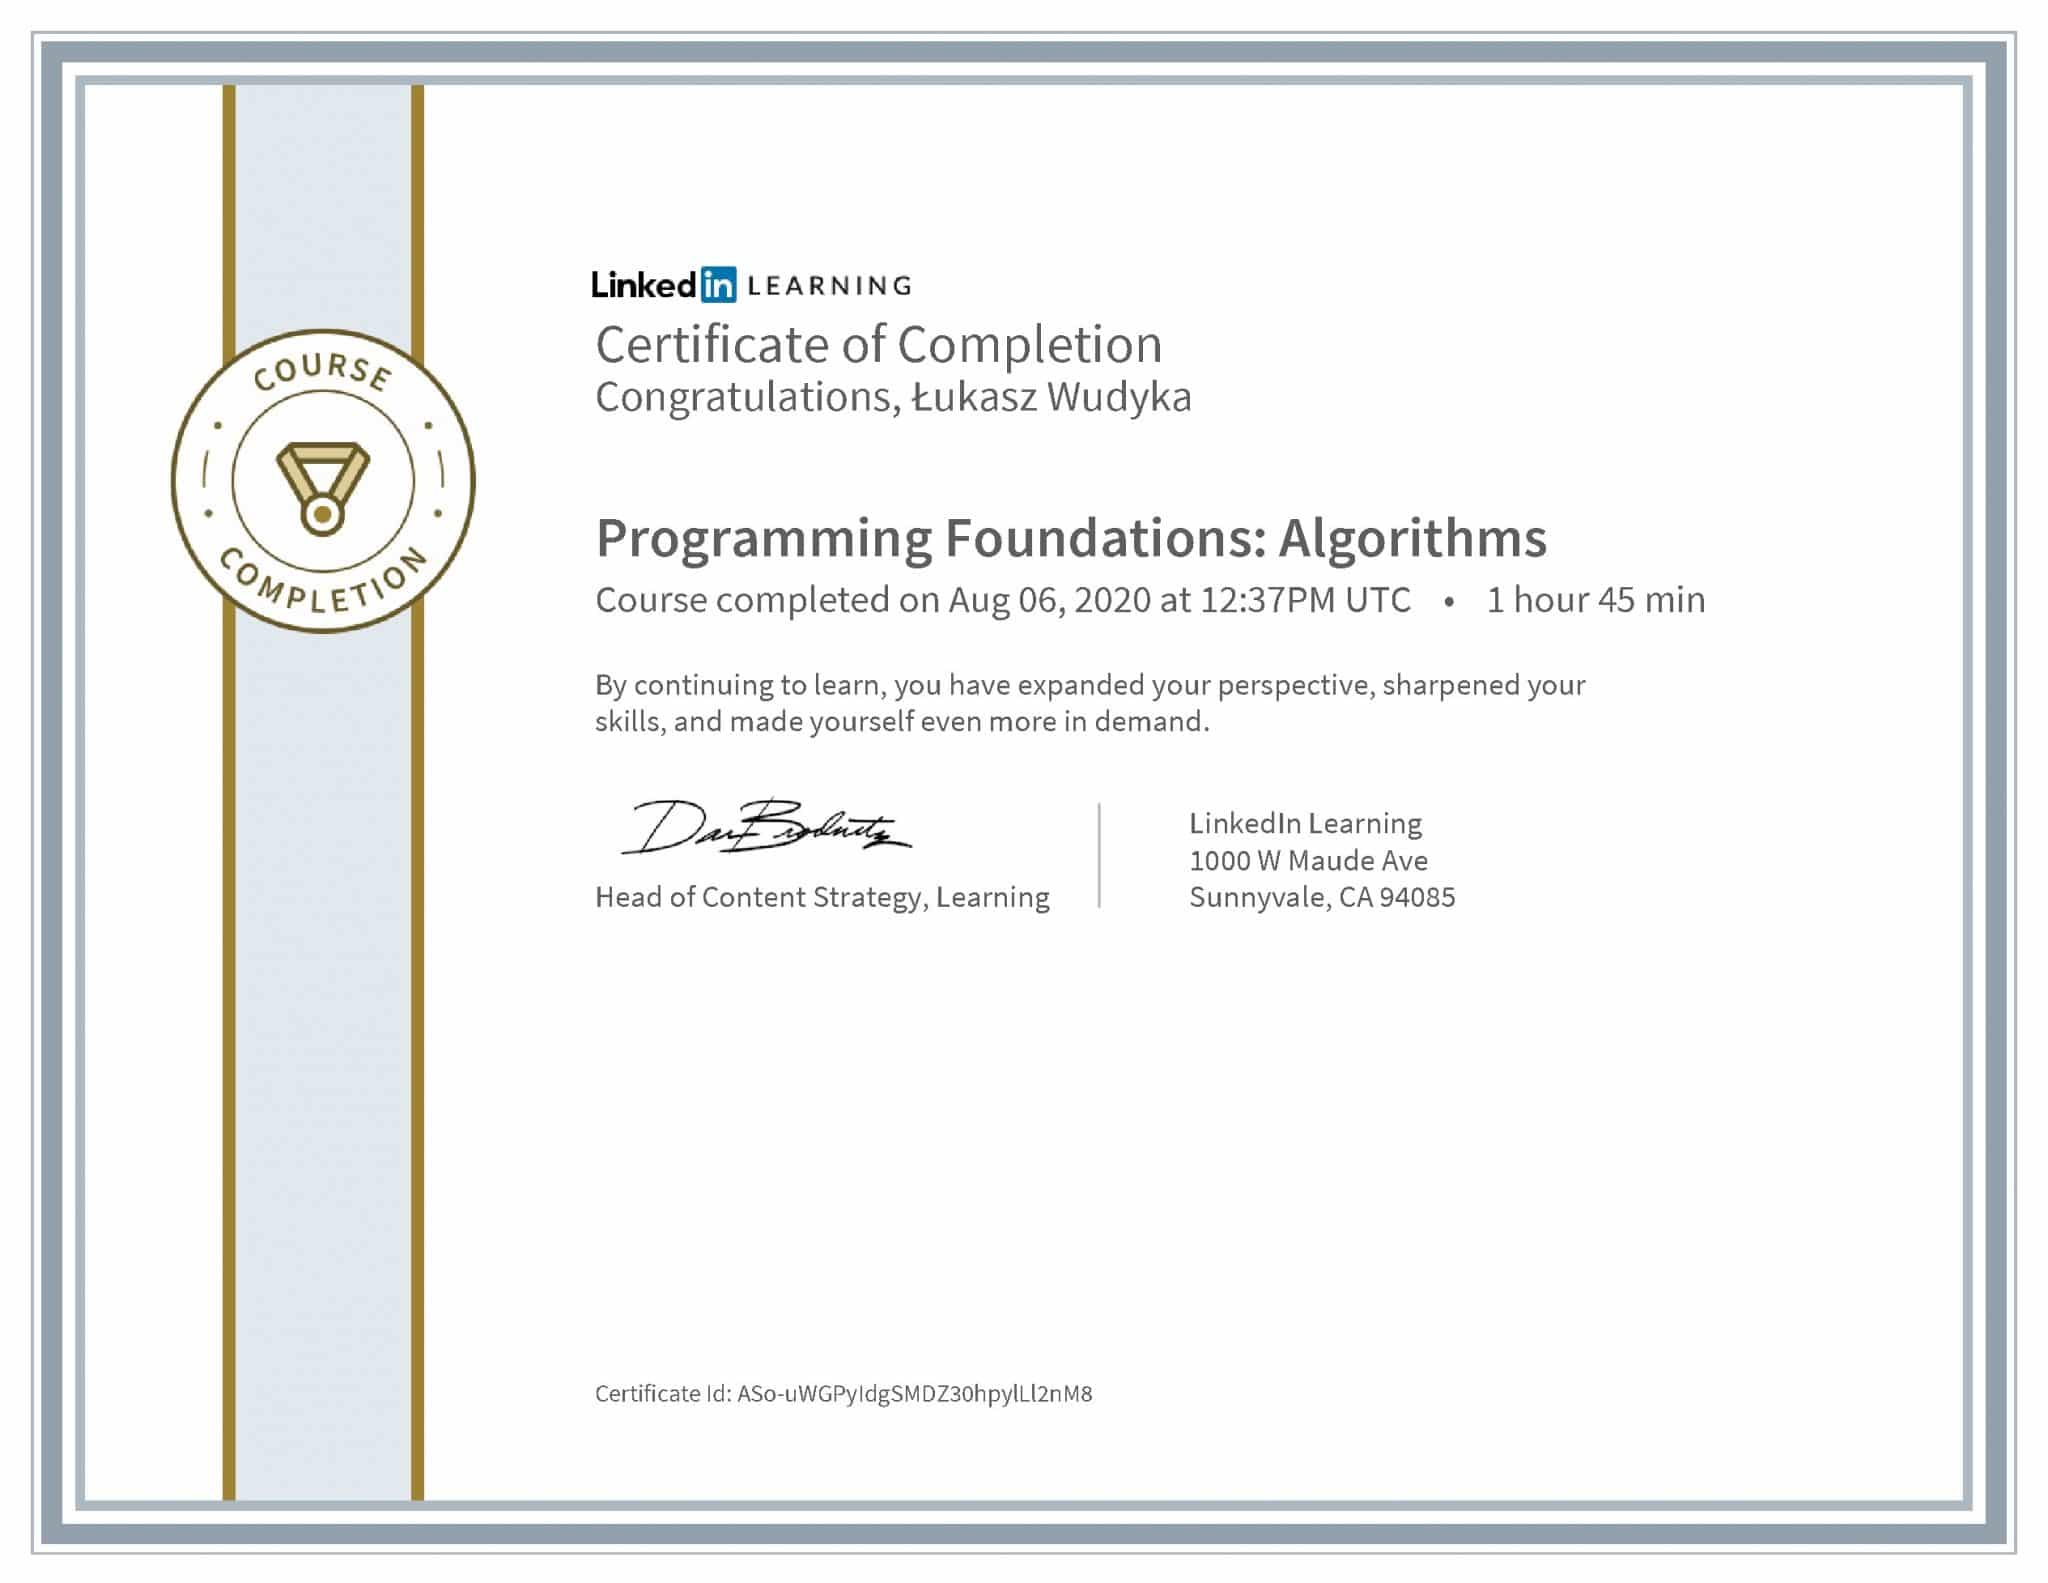 Łukasz Wudyka certyfikat LinkedIn Programming Foundations: Algorithms